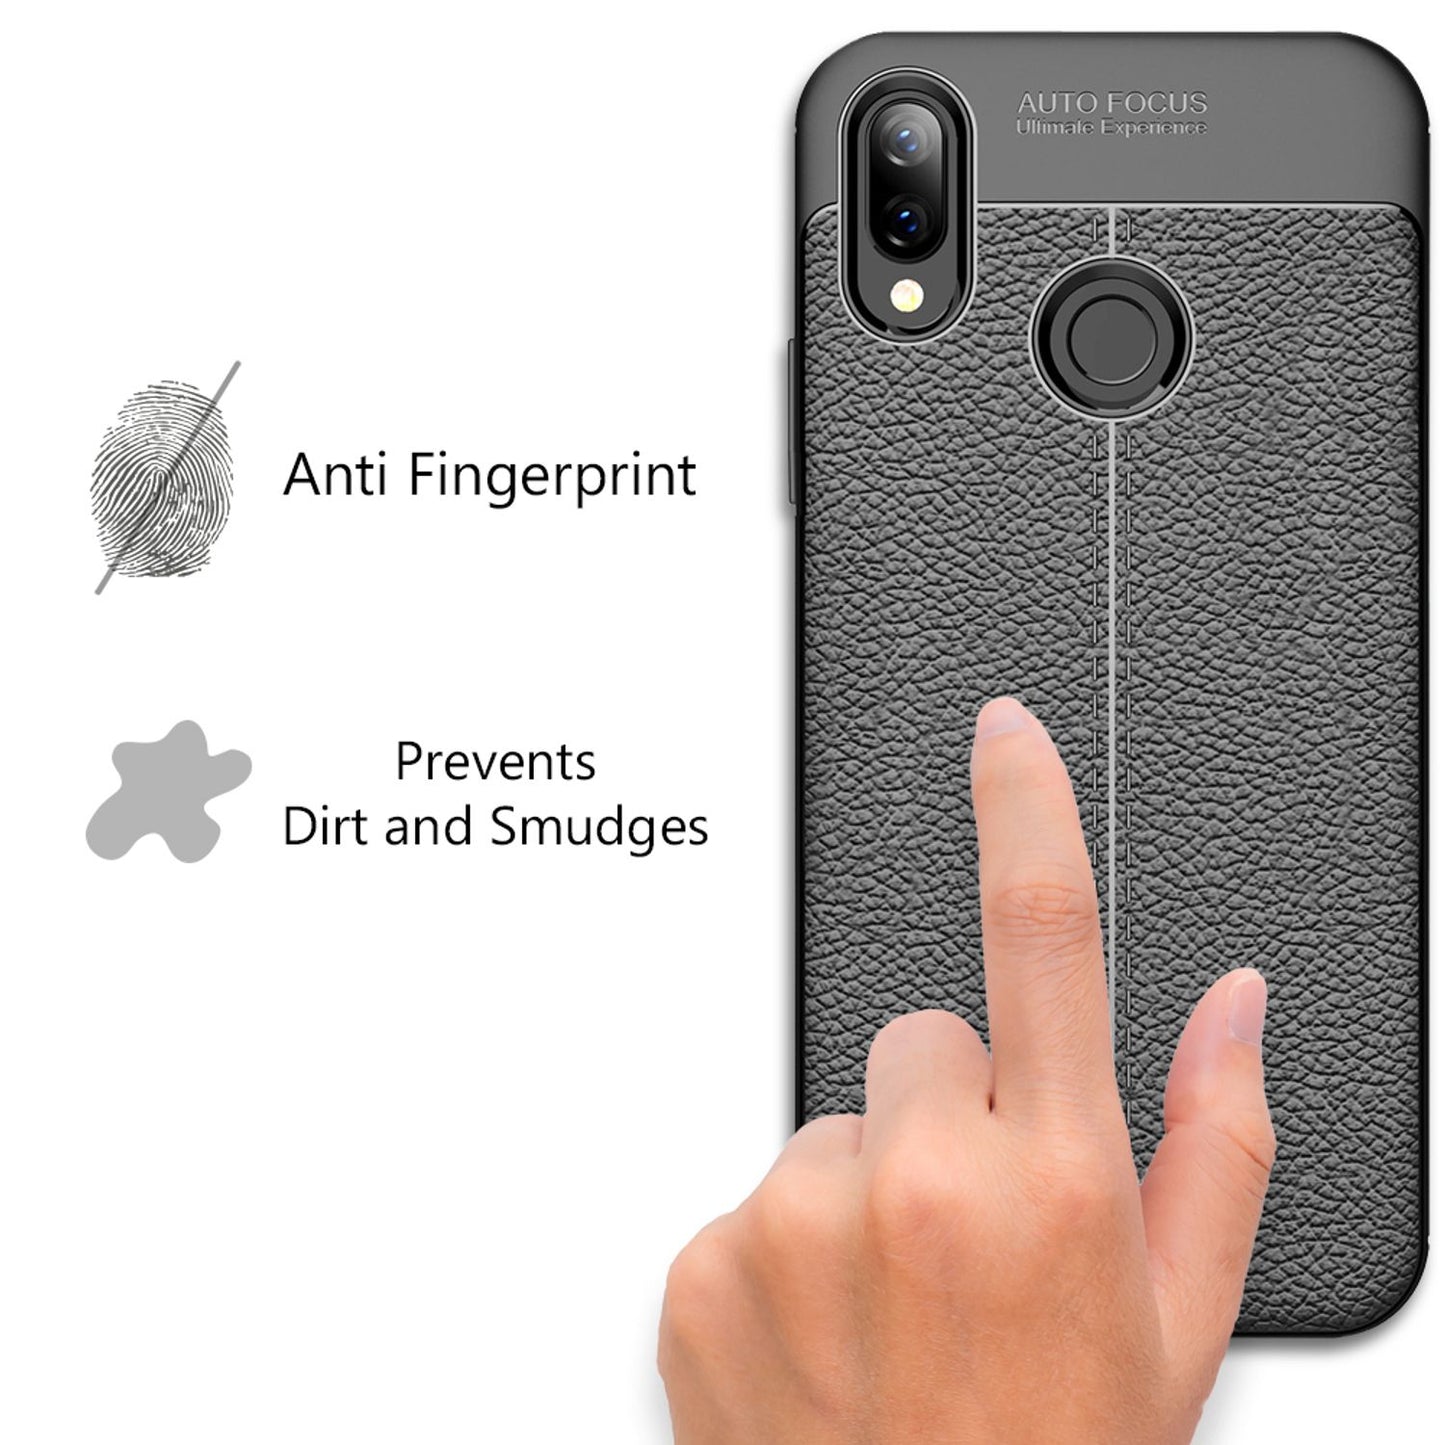 NALIA Handy Hülle für Huawei P smart+ 2018, Leder Case Silikon Cover Schutz Etui